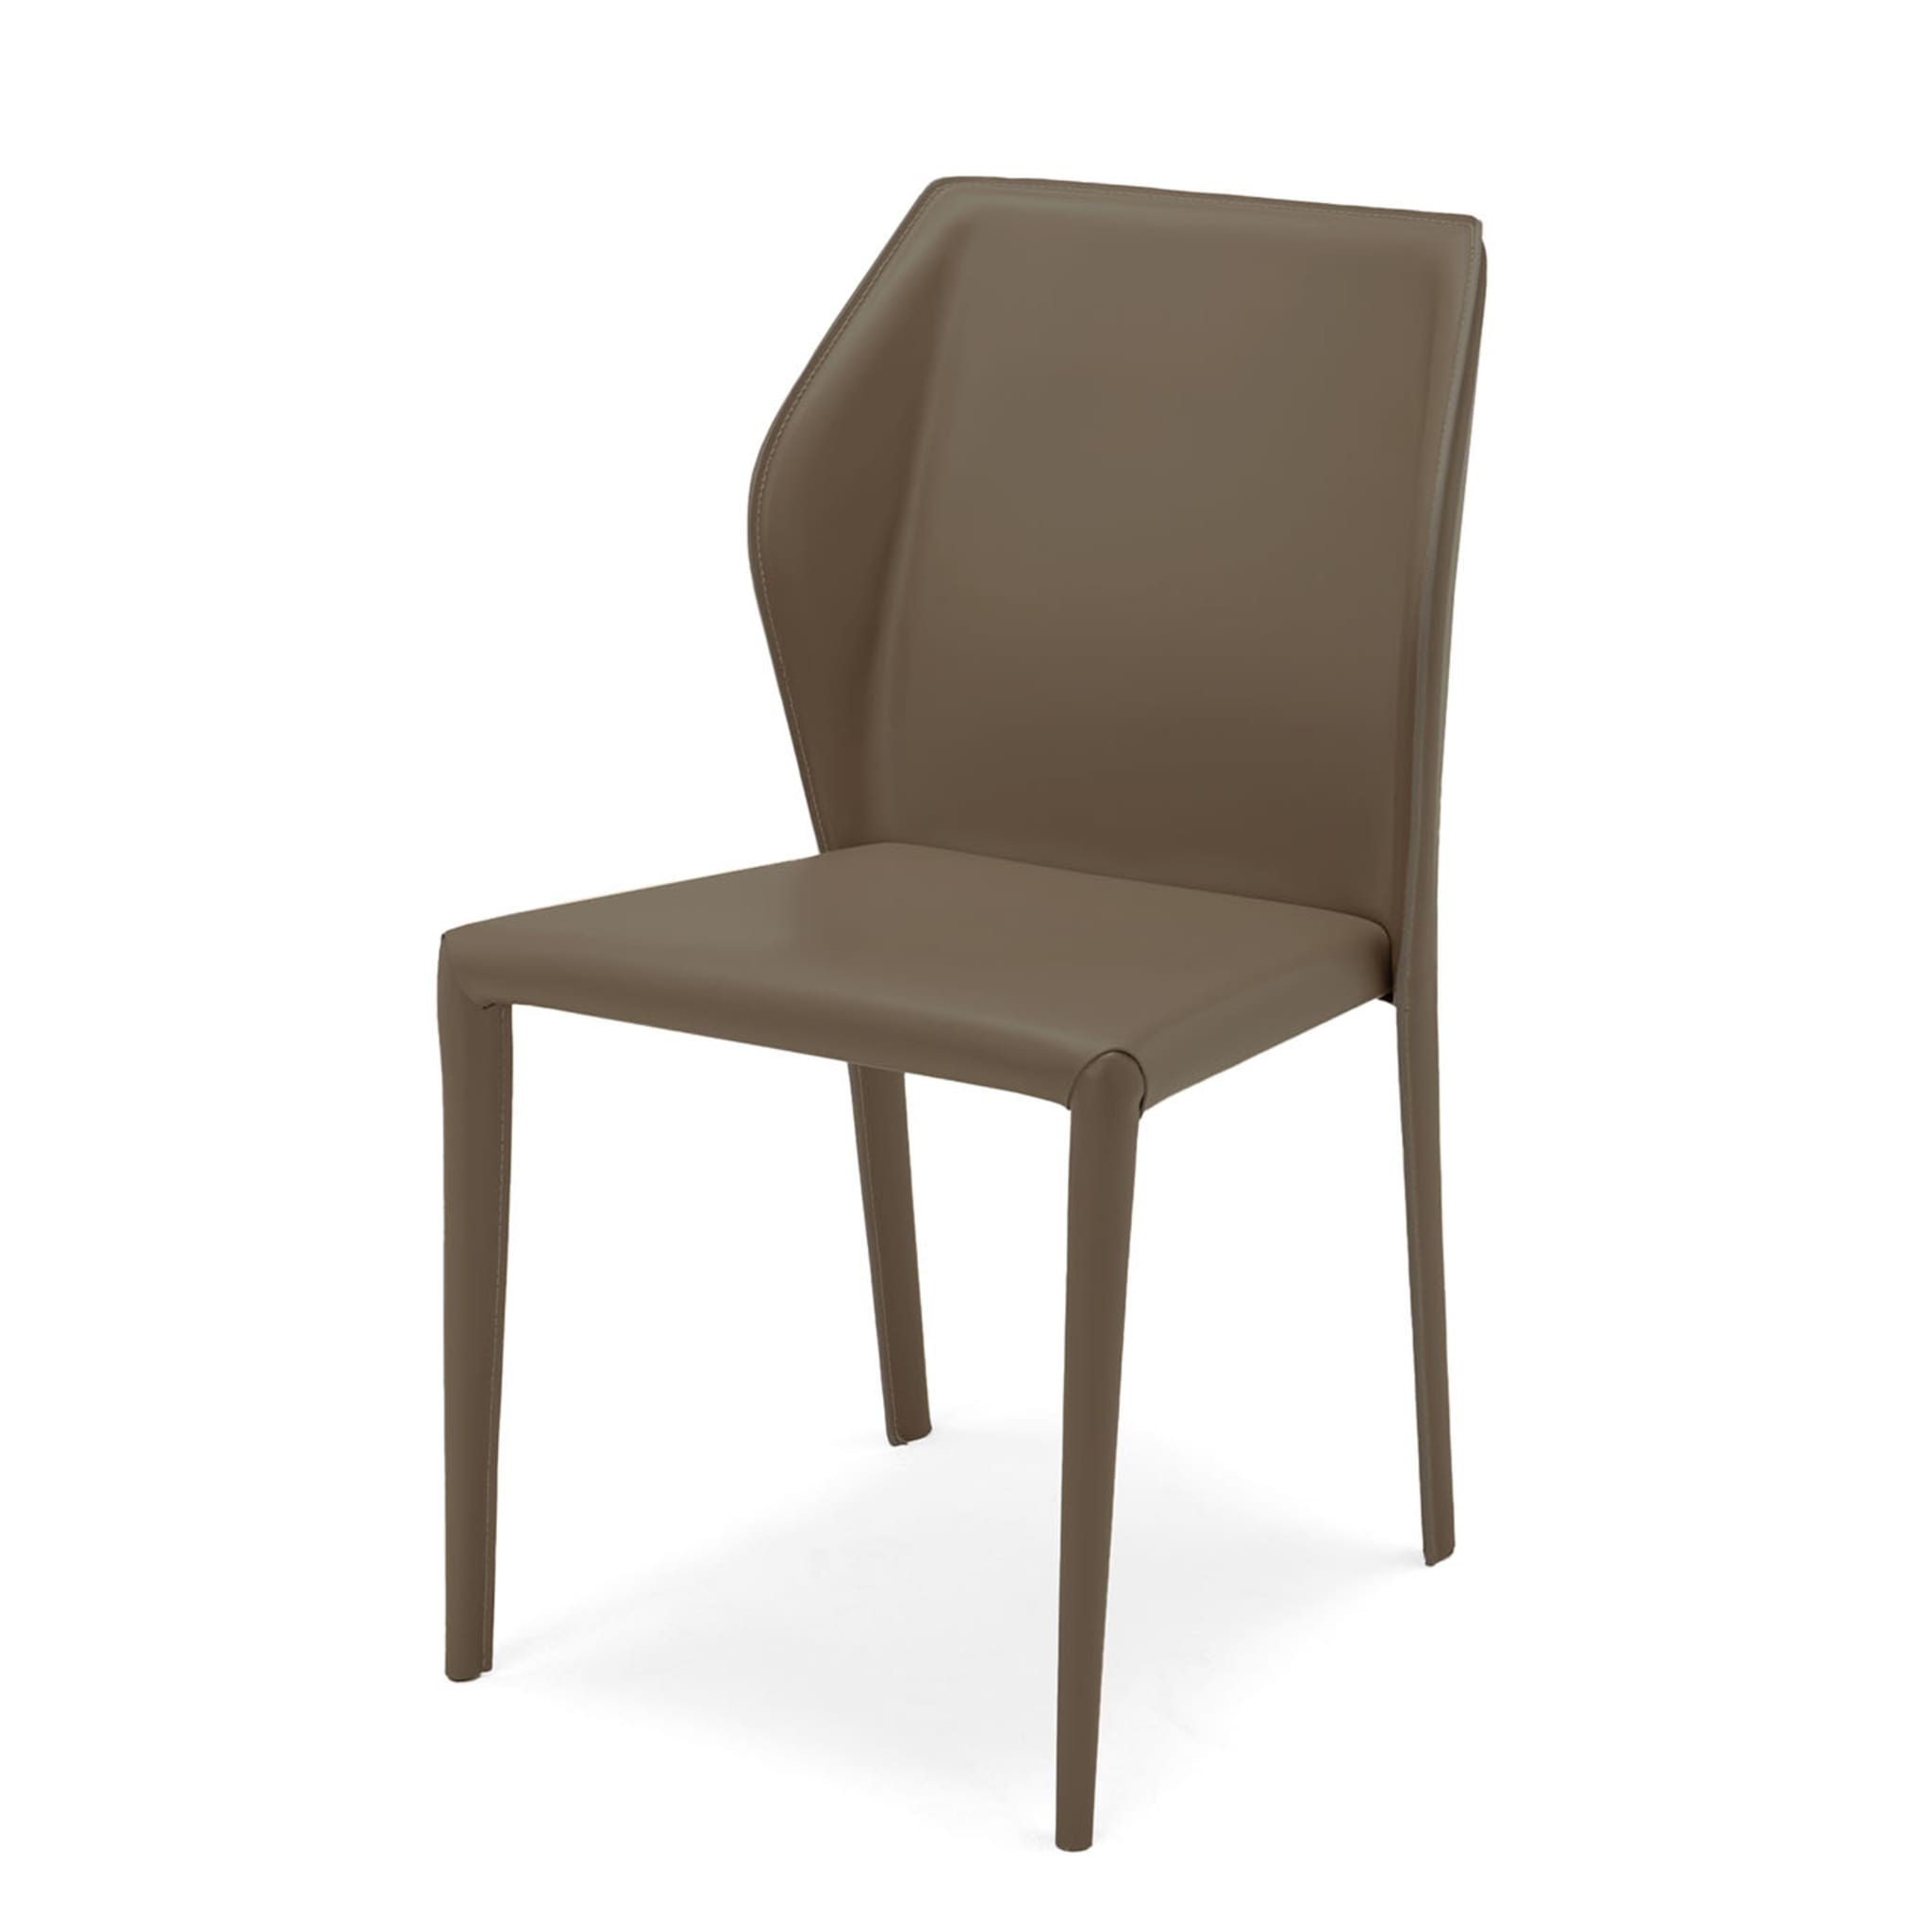 Set of 2 Fold Chair  - Alternative view 1